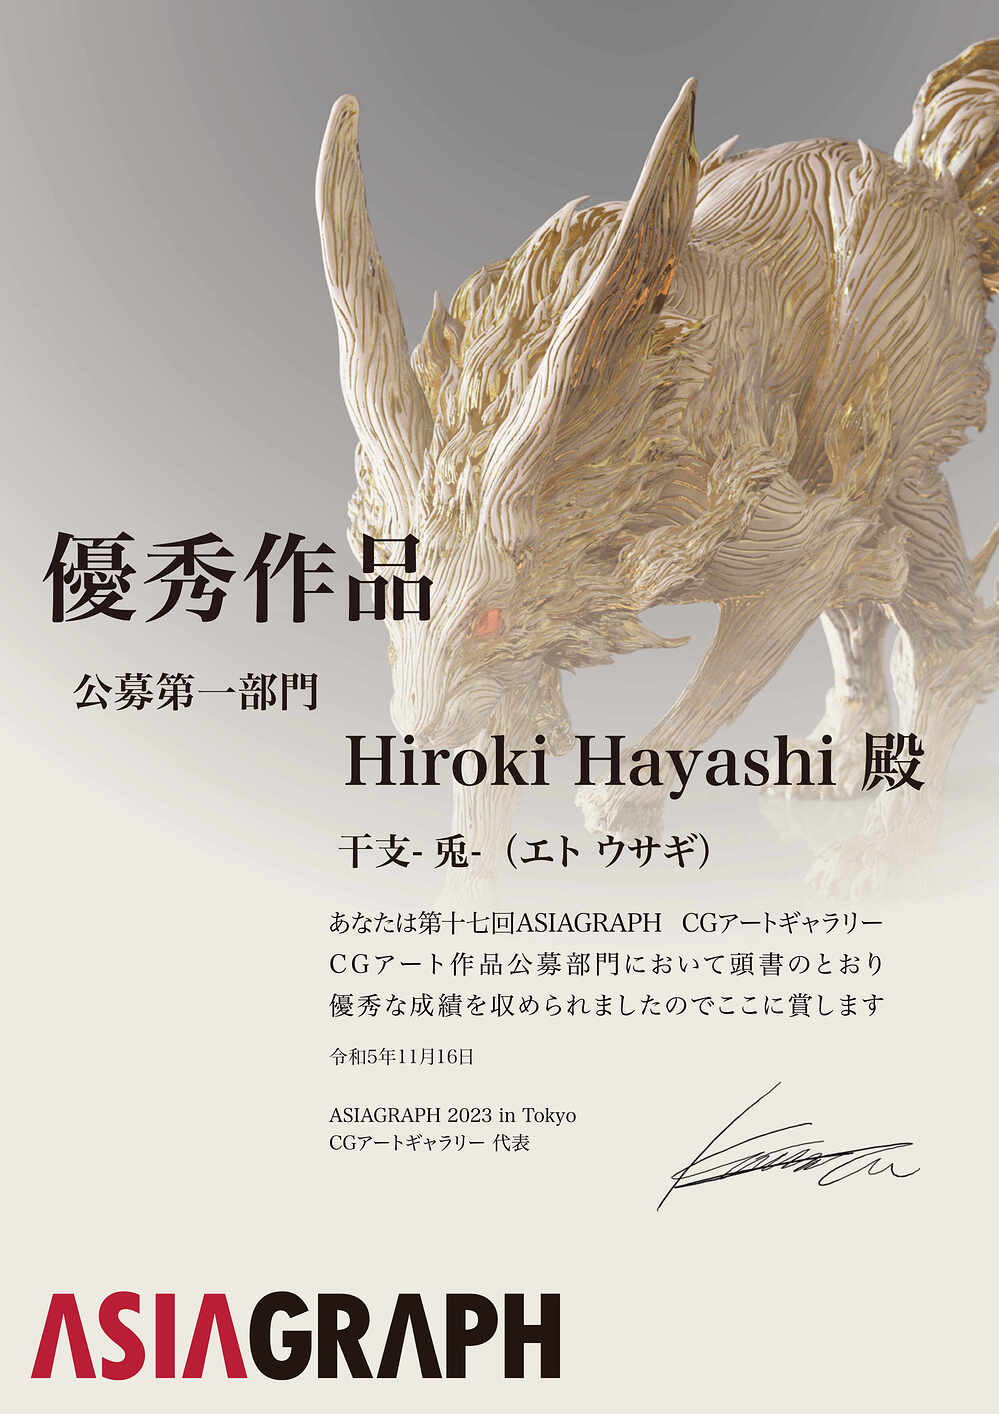 Hiroki Hayashi